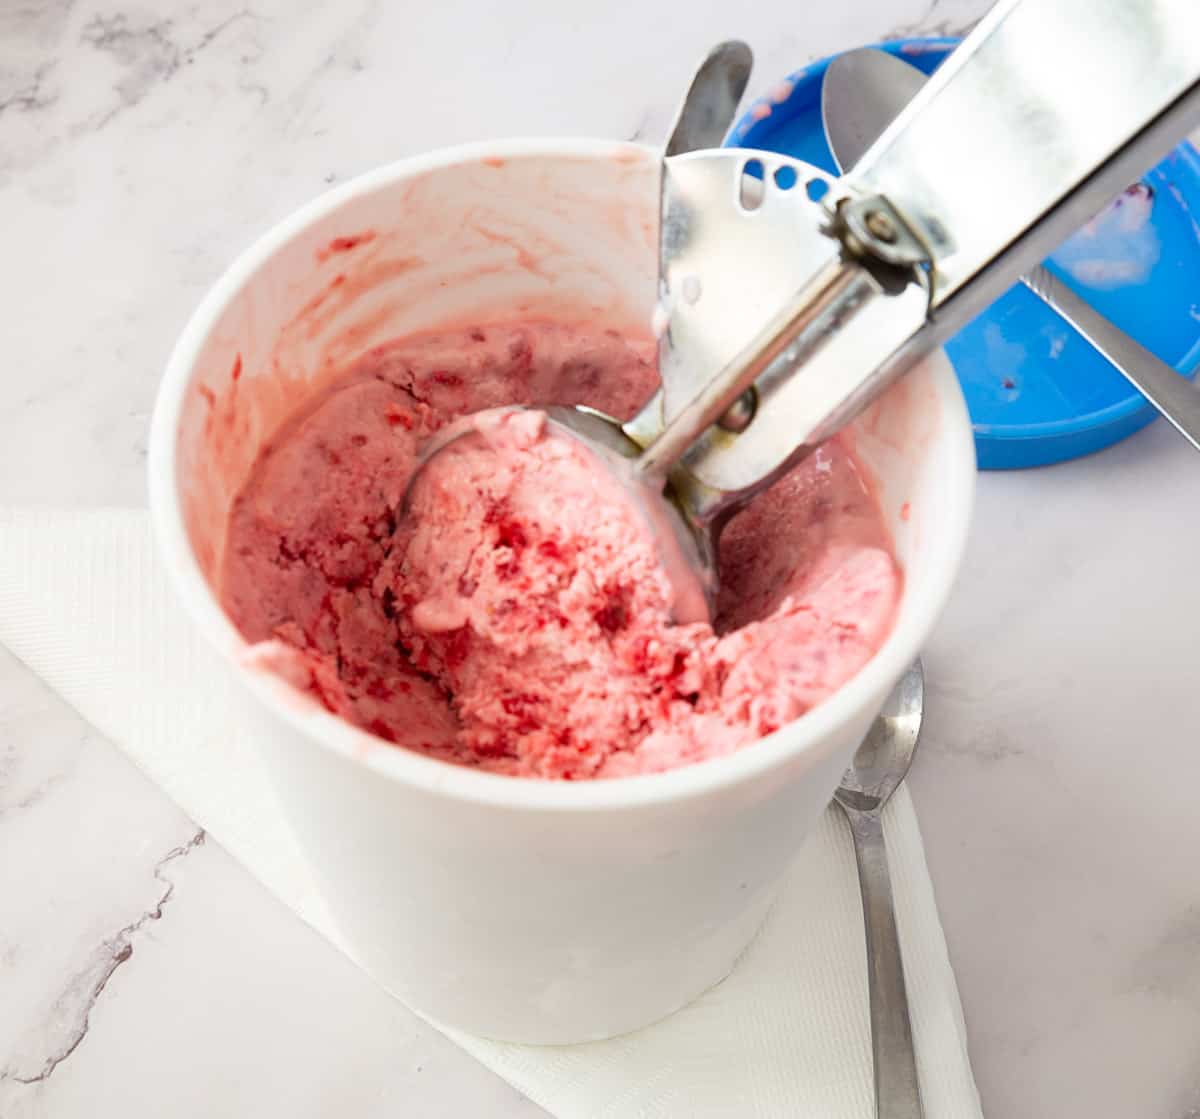 An ice cream tub with raspberry ice cream and scoop.